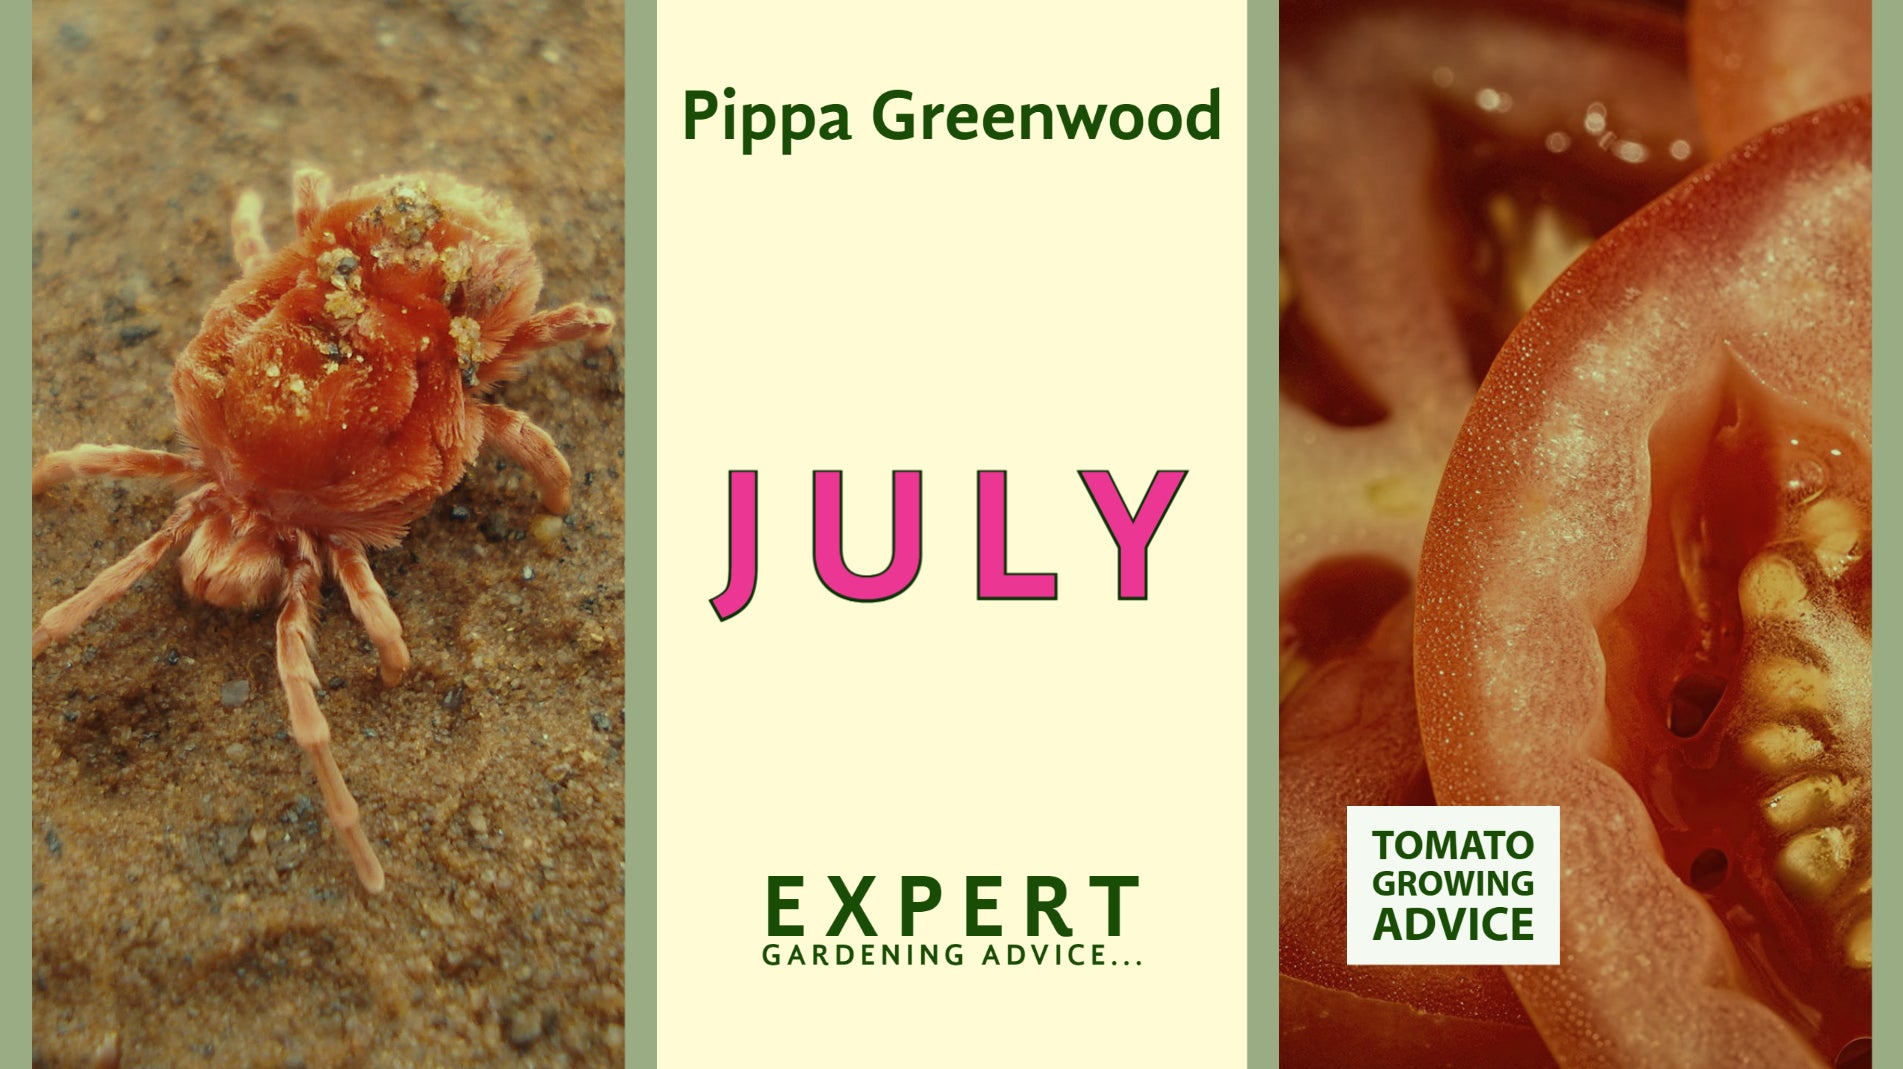 Pippa Greenwood Gardening advice for July